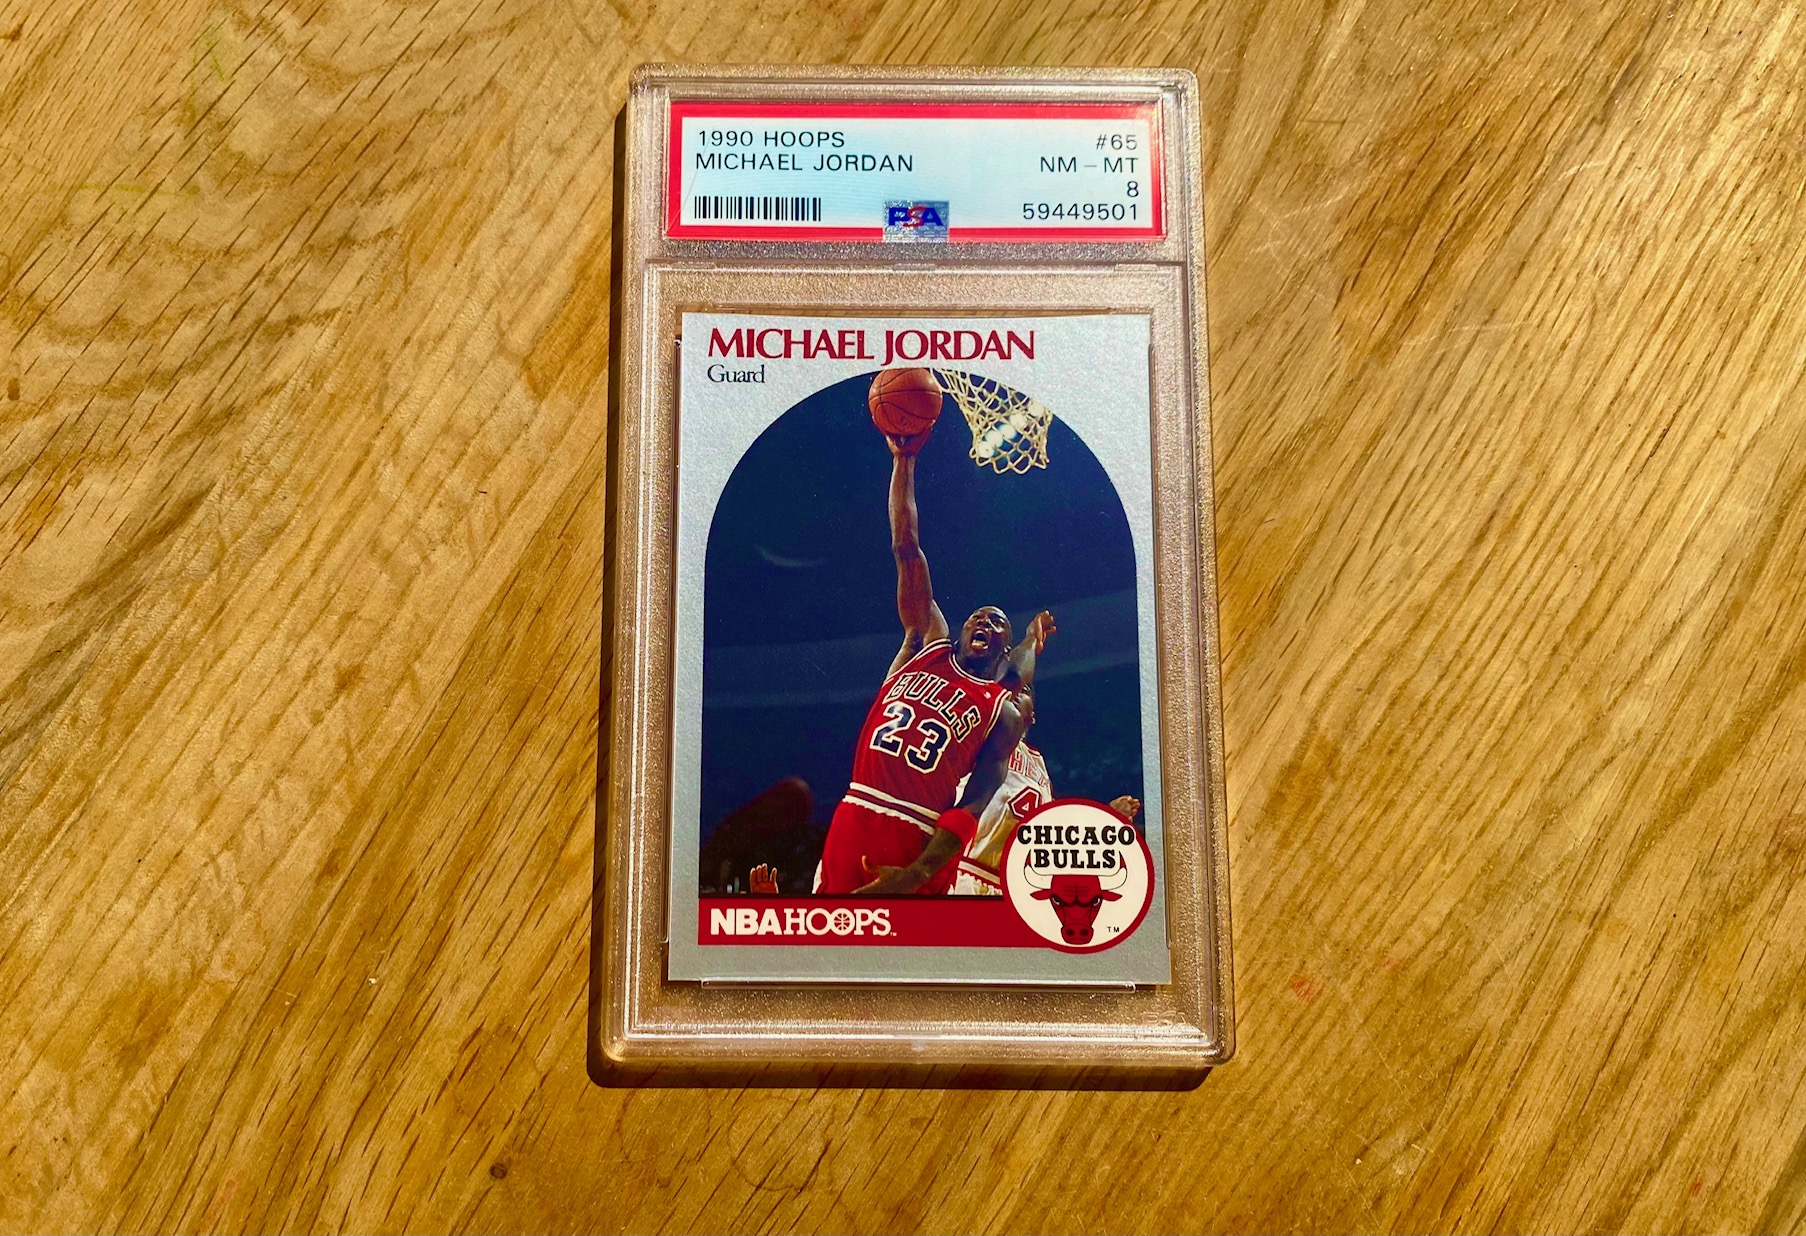 The Michael Jordan Hoops 1990 Trading Card: A Legendary Piece of Sports Memorabilia © Ballerstaedt